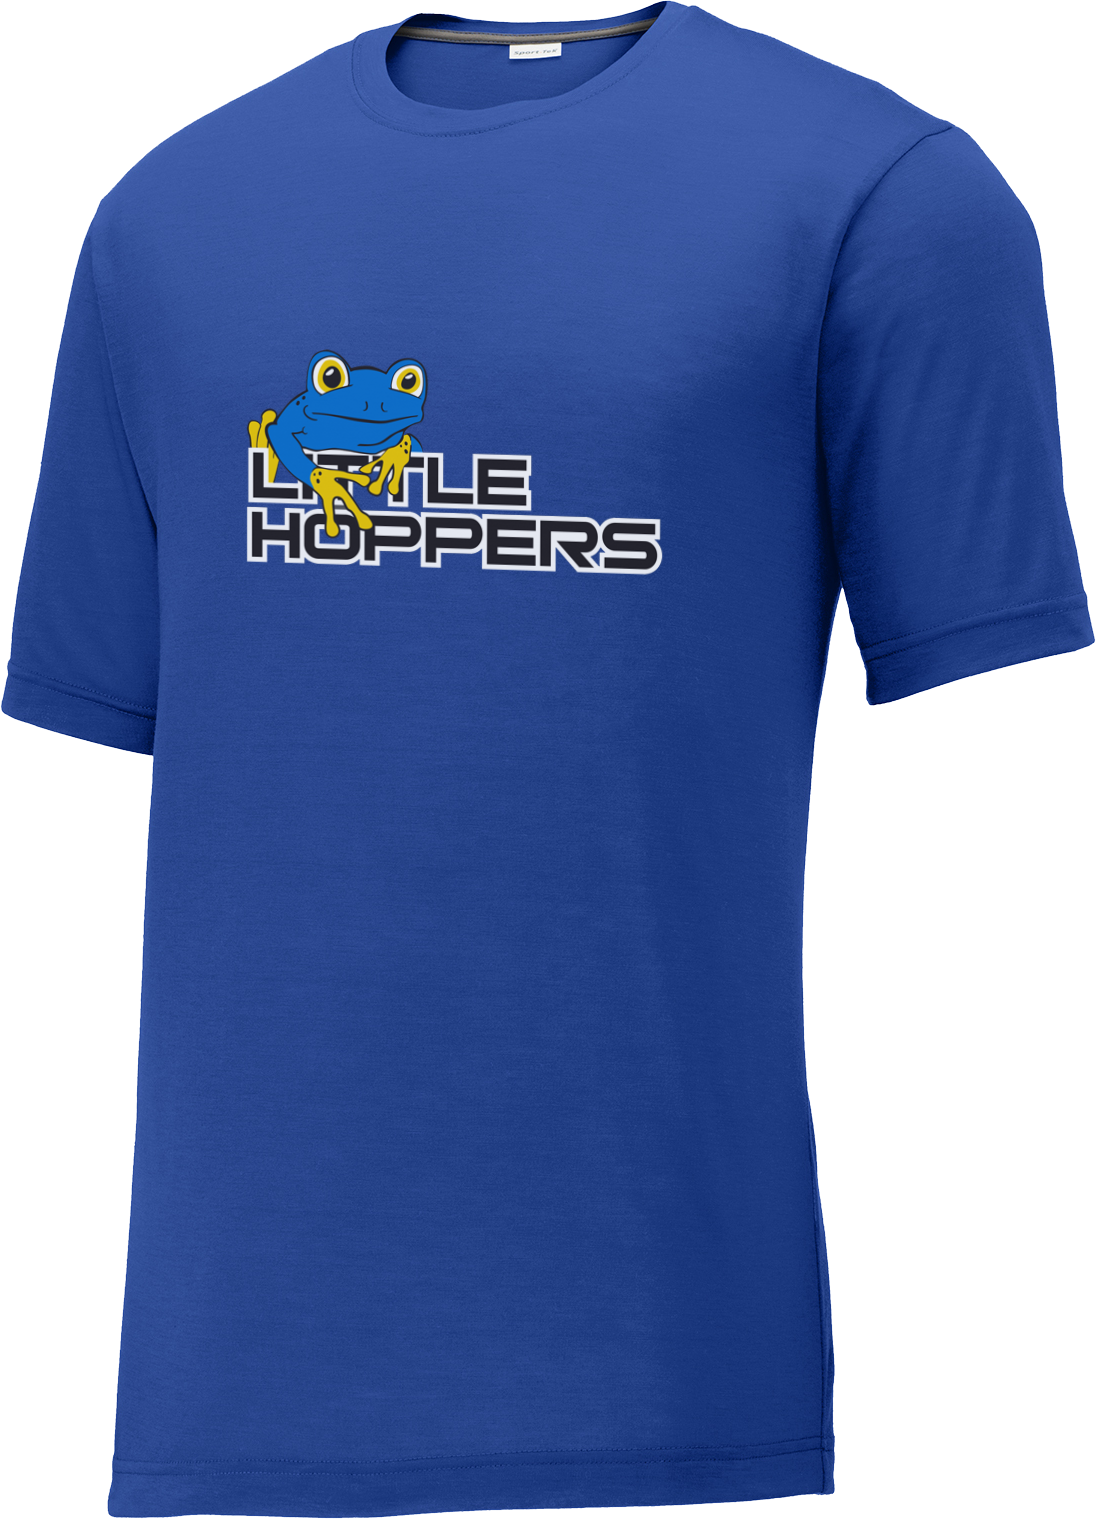 Little Hoppers Royal Cotton Touch T-Shirt